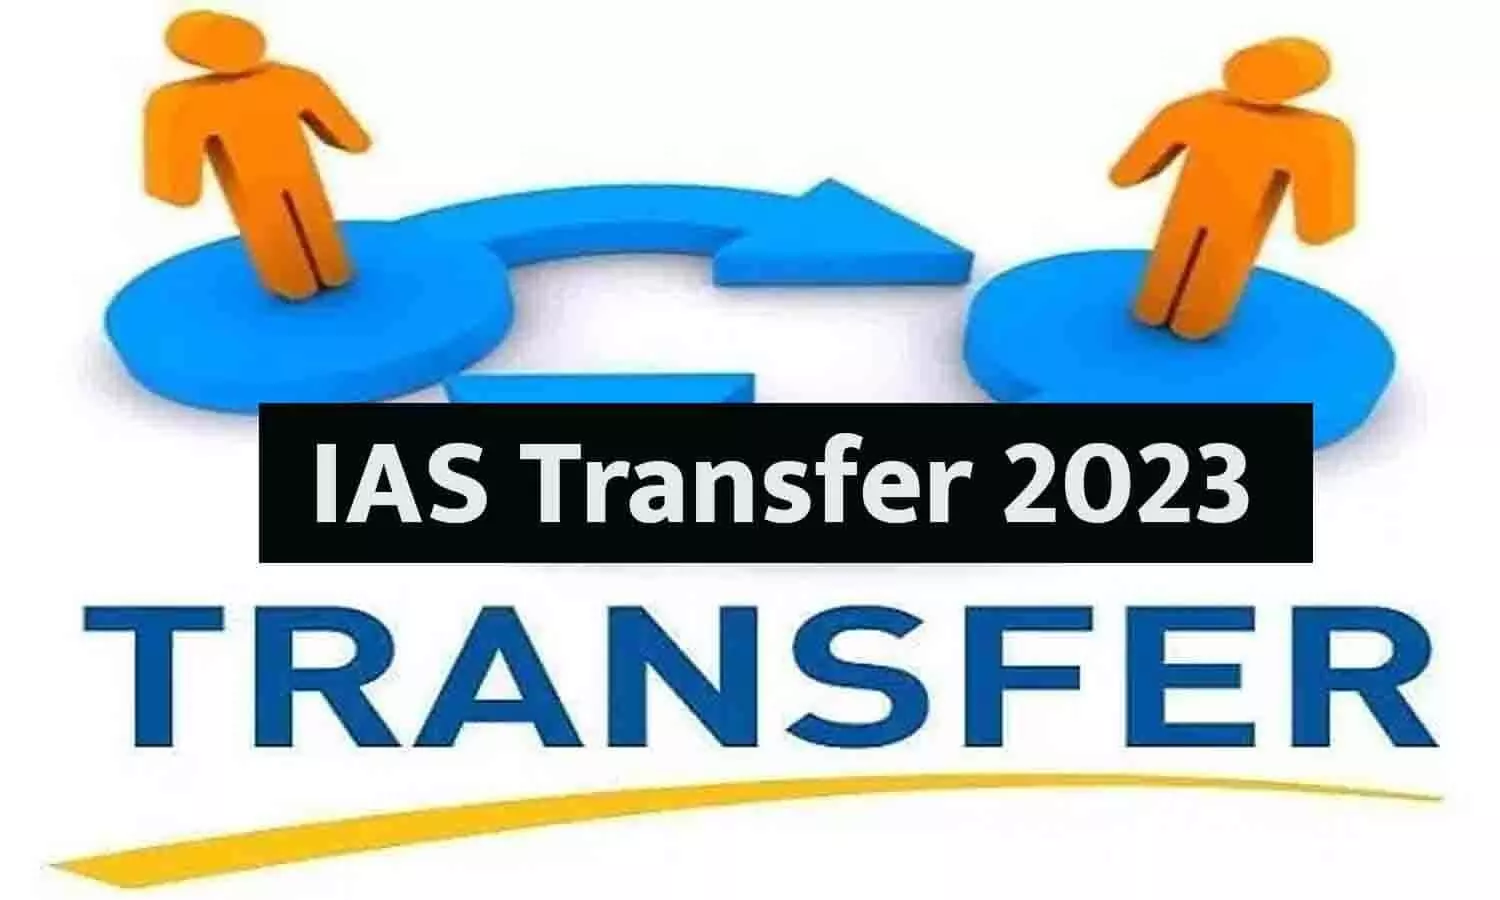 IAS Transfer 2023